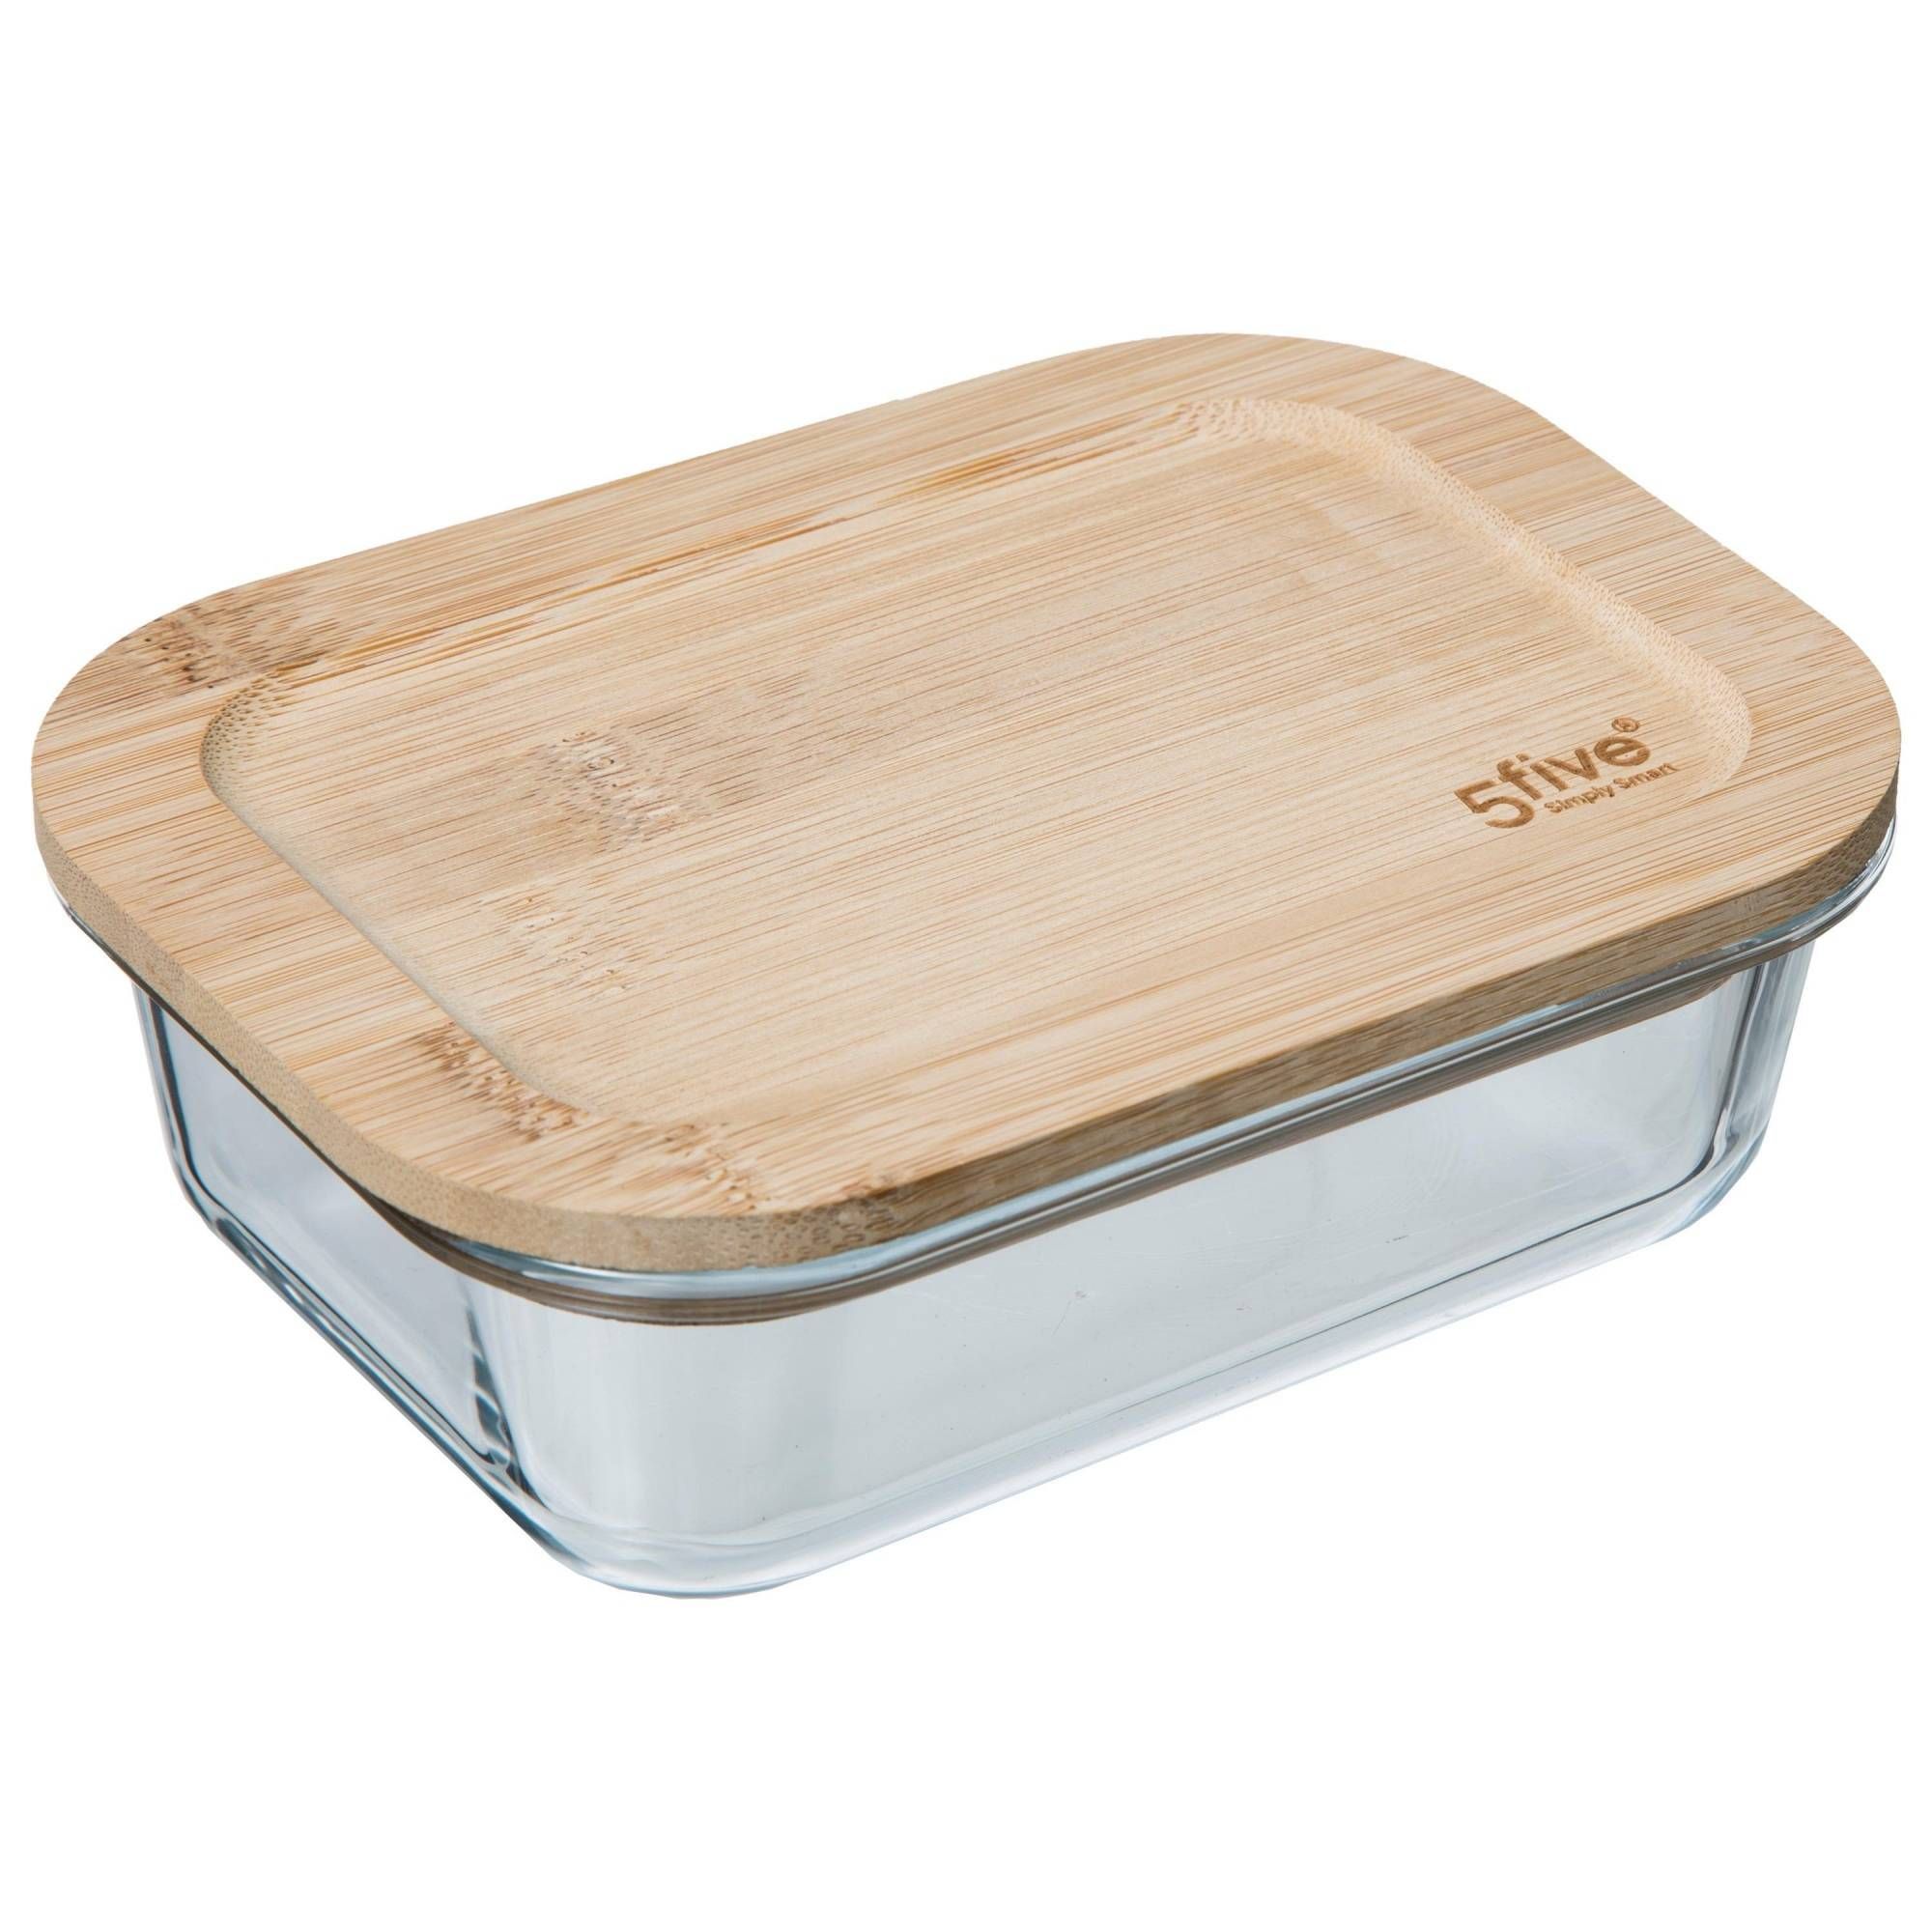 5five Simply Smart Skleněná nádoba na potraviny, bambusové víko, 1 l - EDAXO.CZ s.r.o.